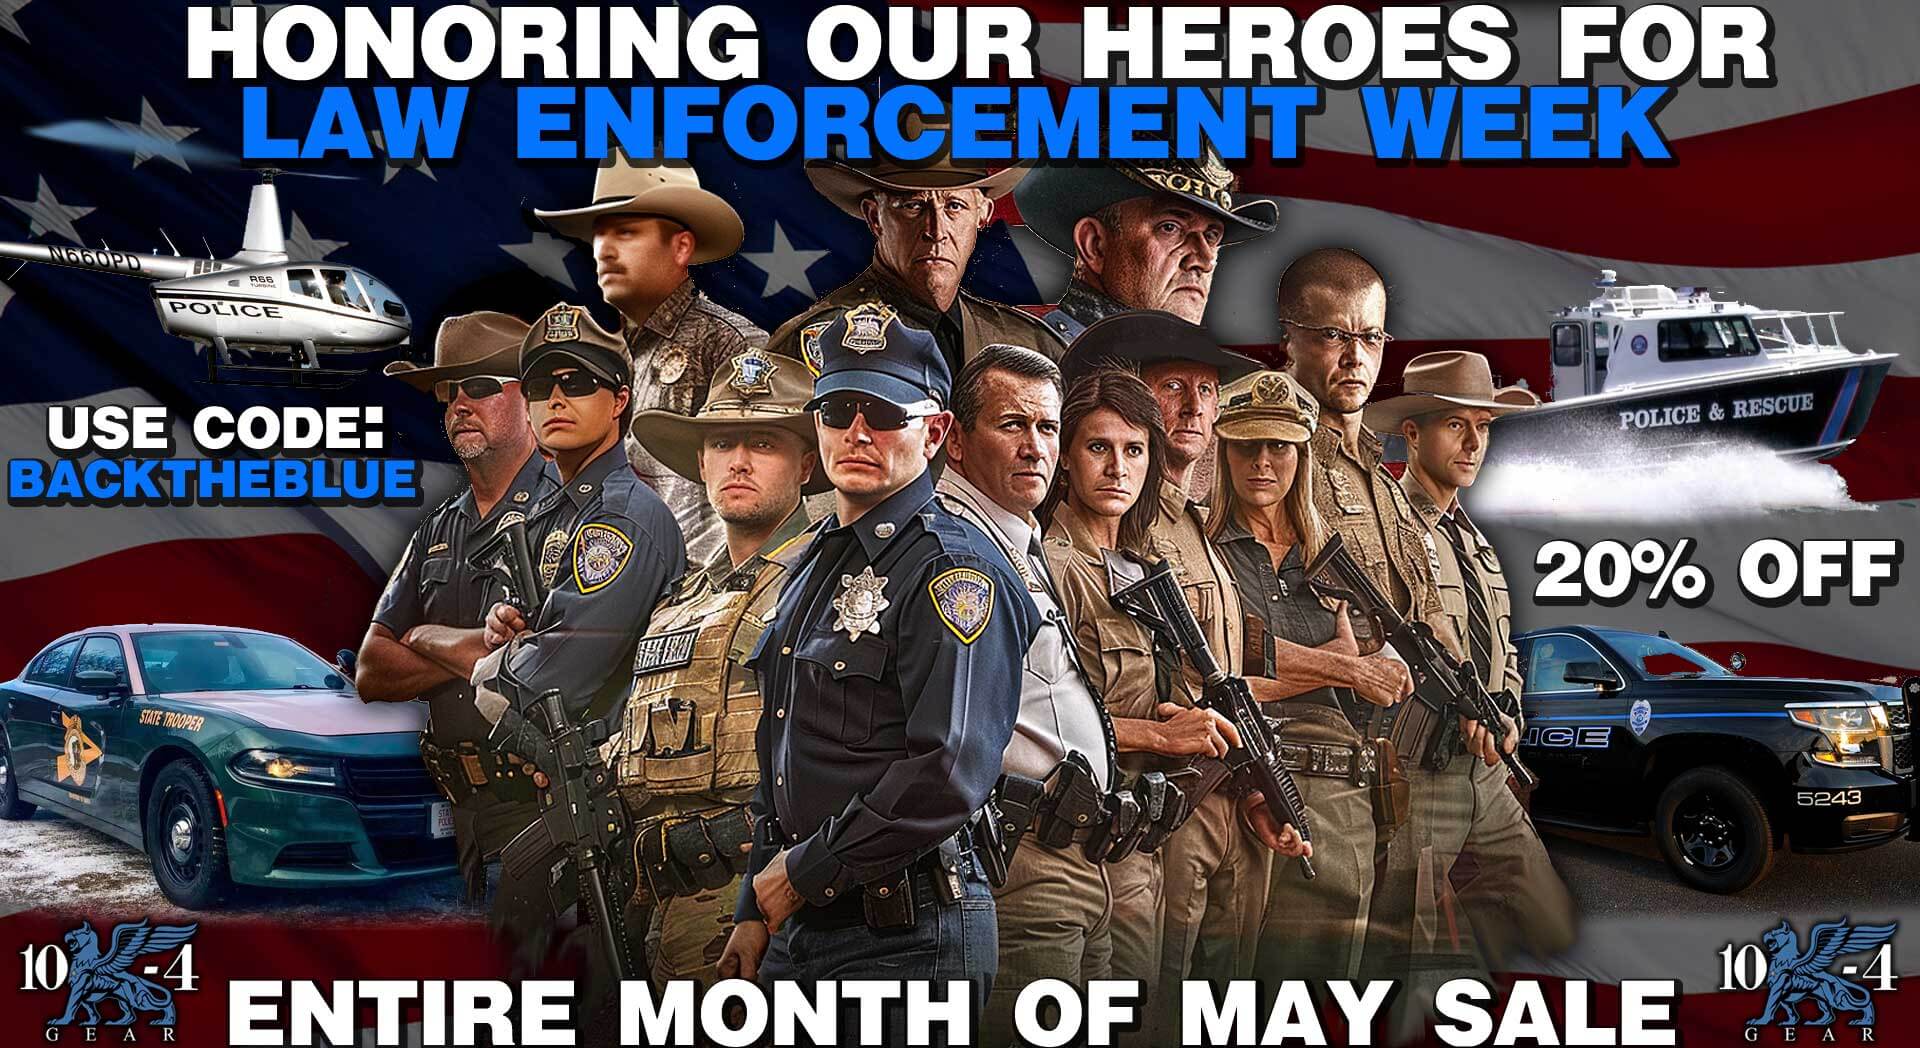 Celebrate Law Enforcement Week All Month with 10-4 Gear Sale